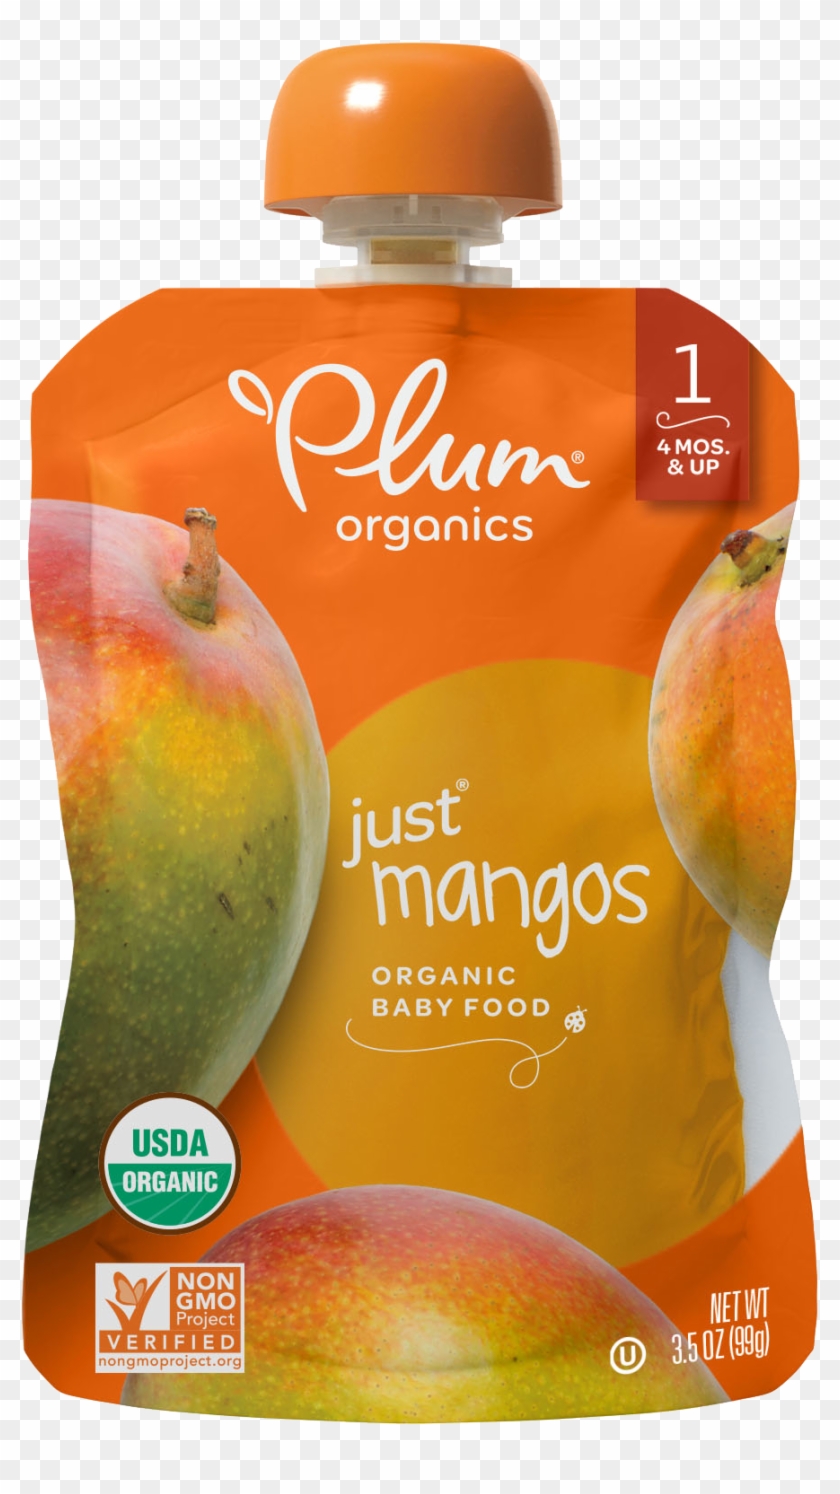 Plum Organics - Plum Organics Just Prunes Clipart